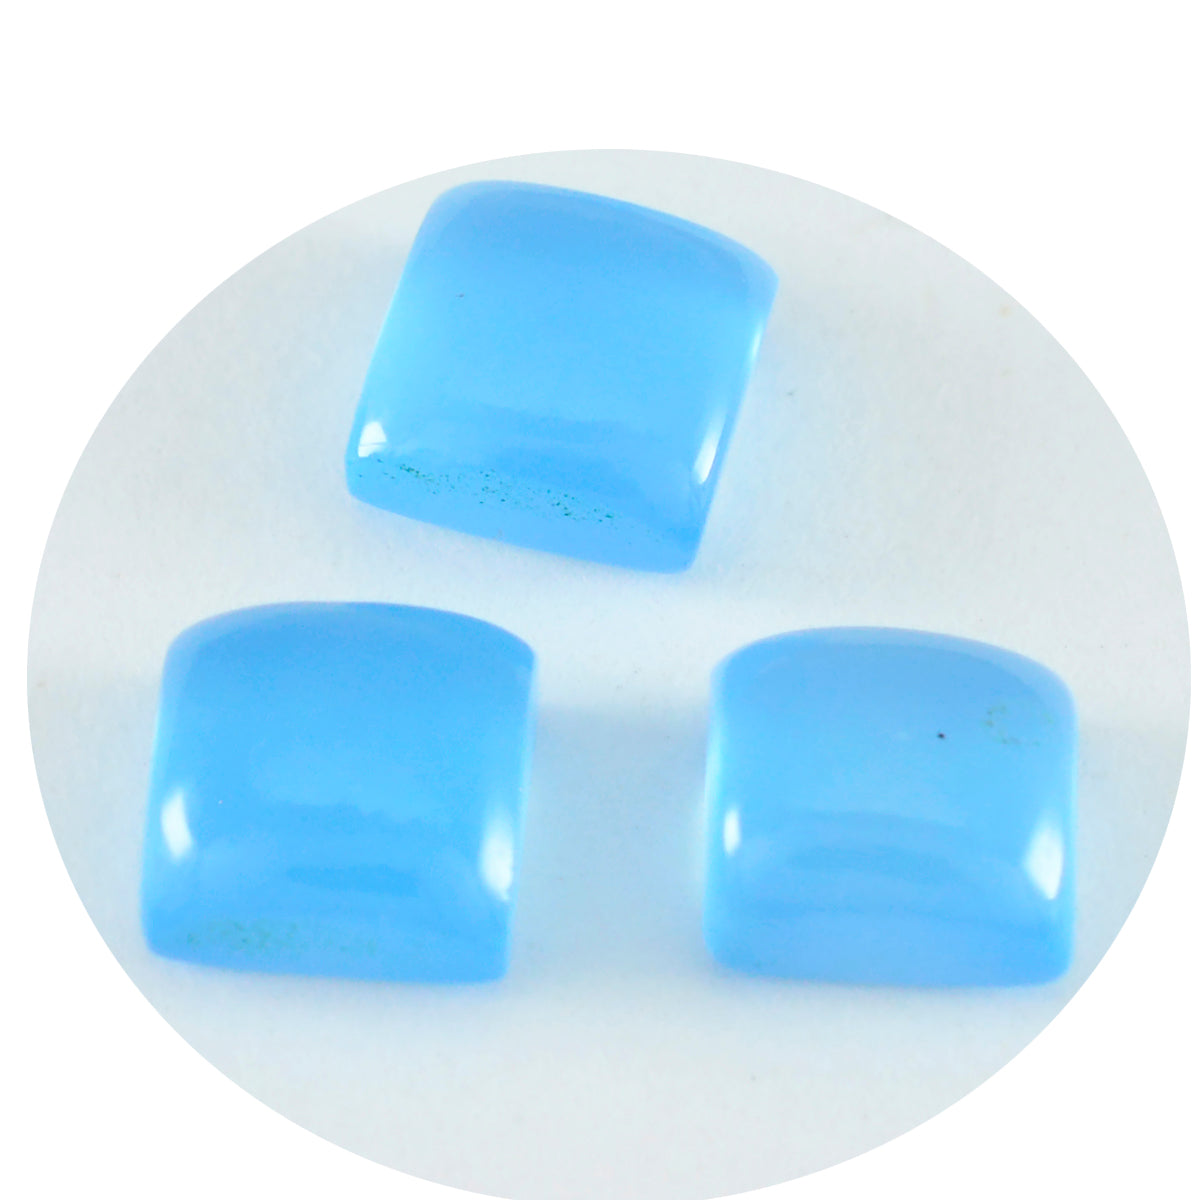 Riyogems 1PC Blue Chalcedony Cabochon 9x9 mm Square Shape astonishing Quality Gemstone